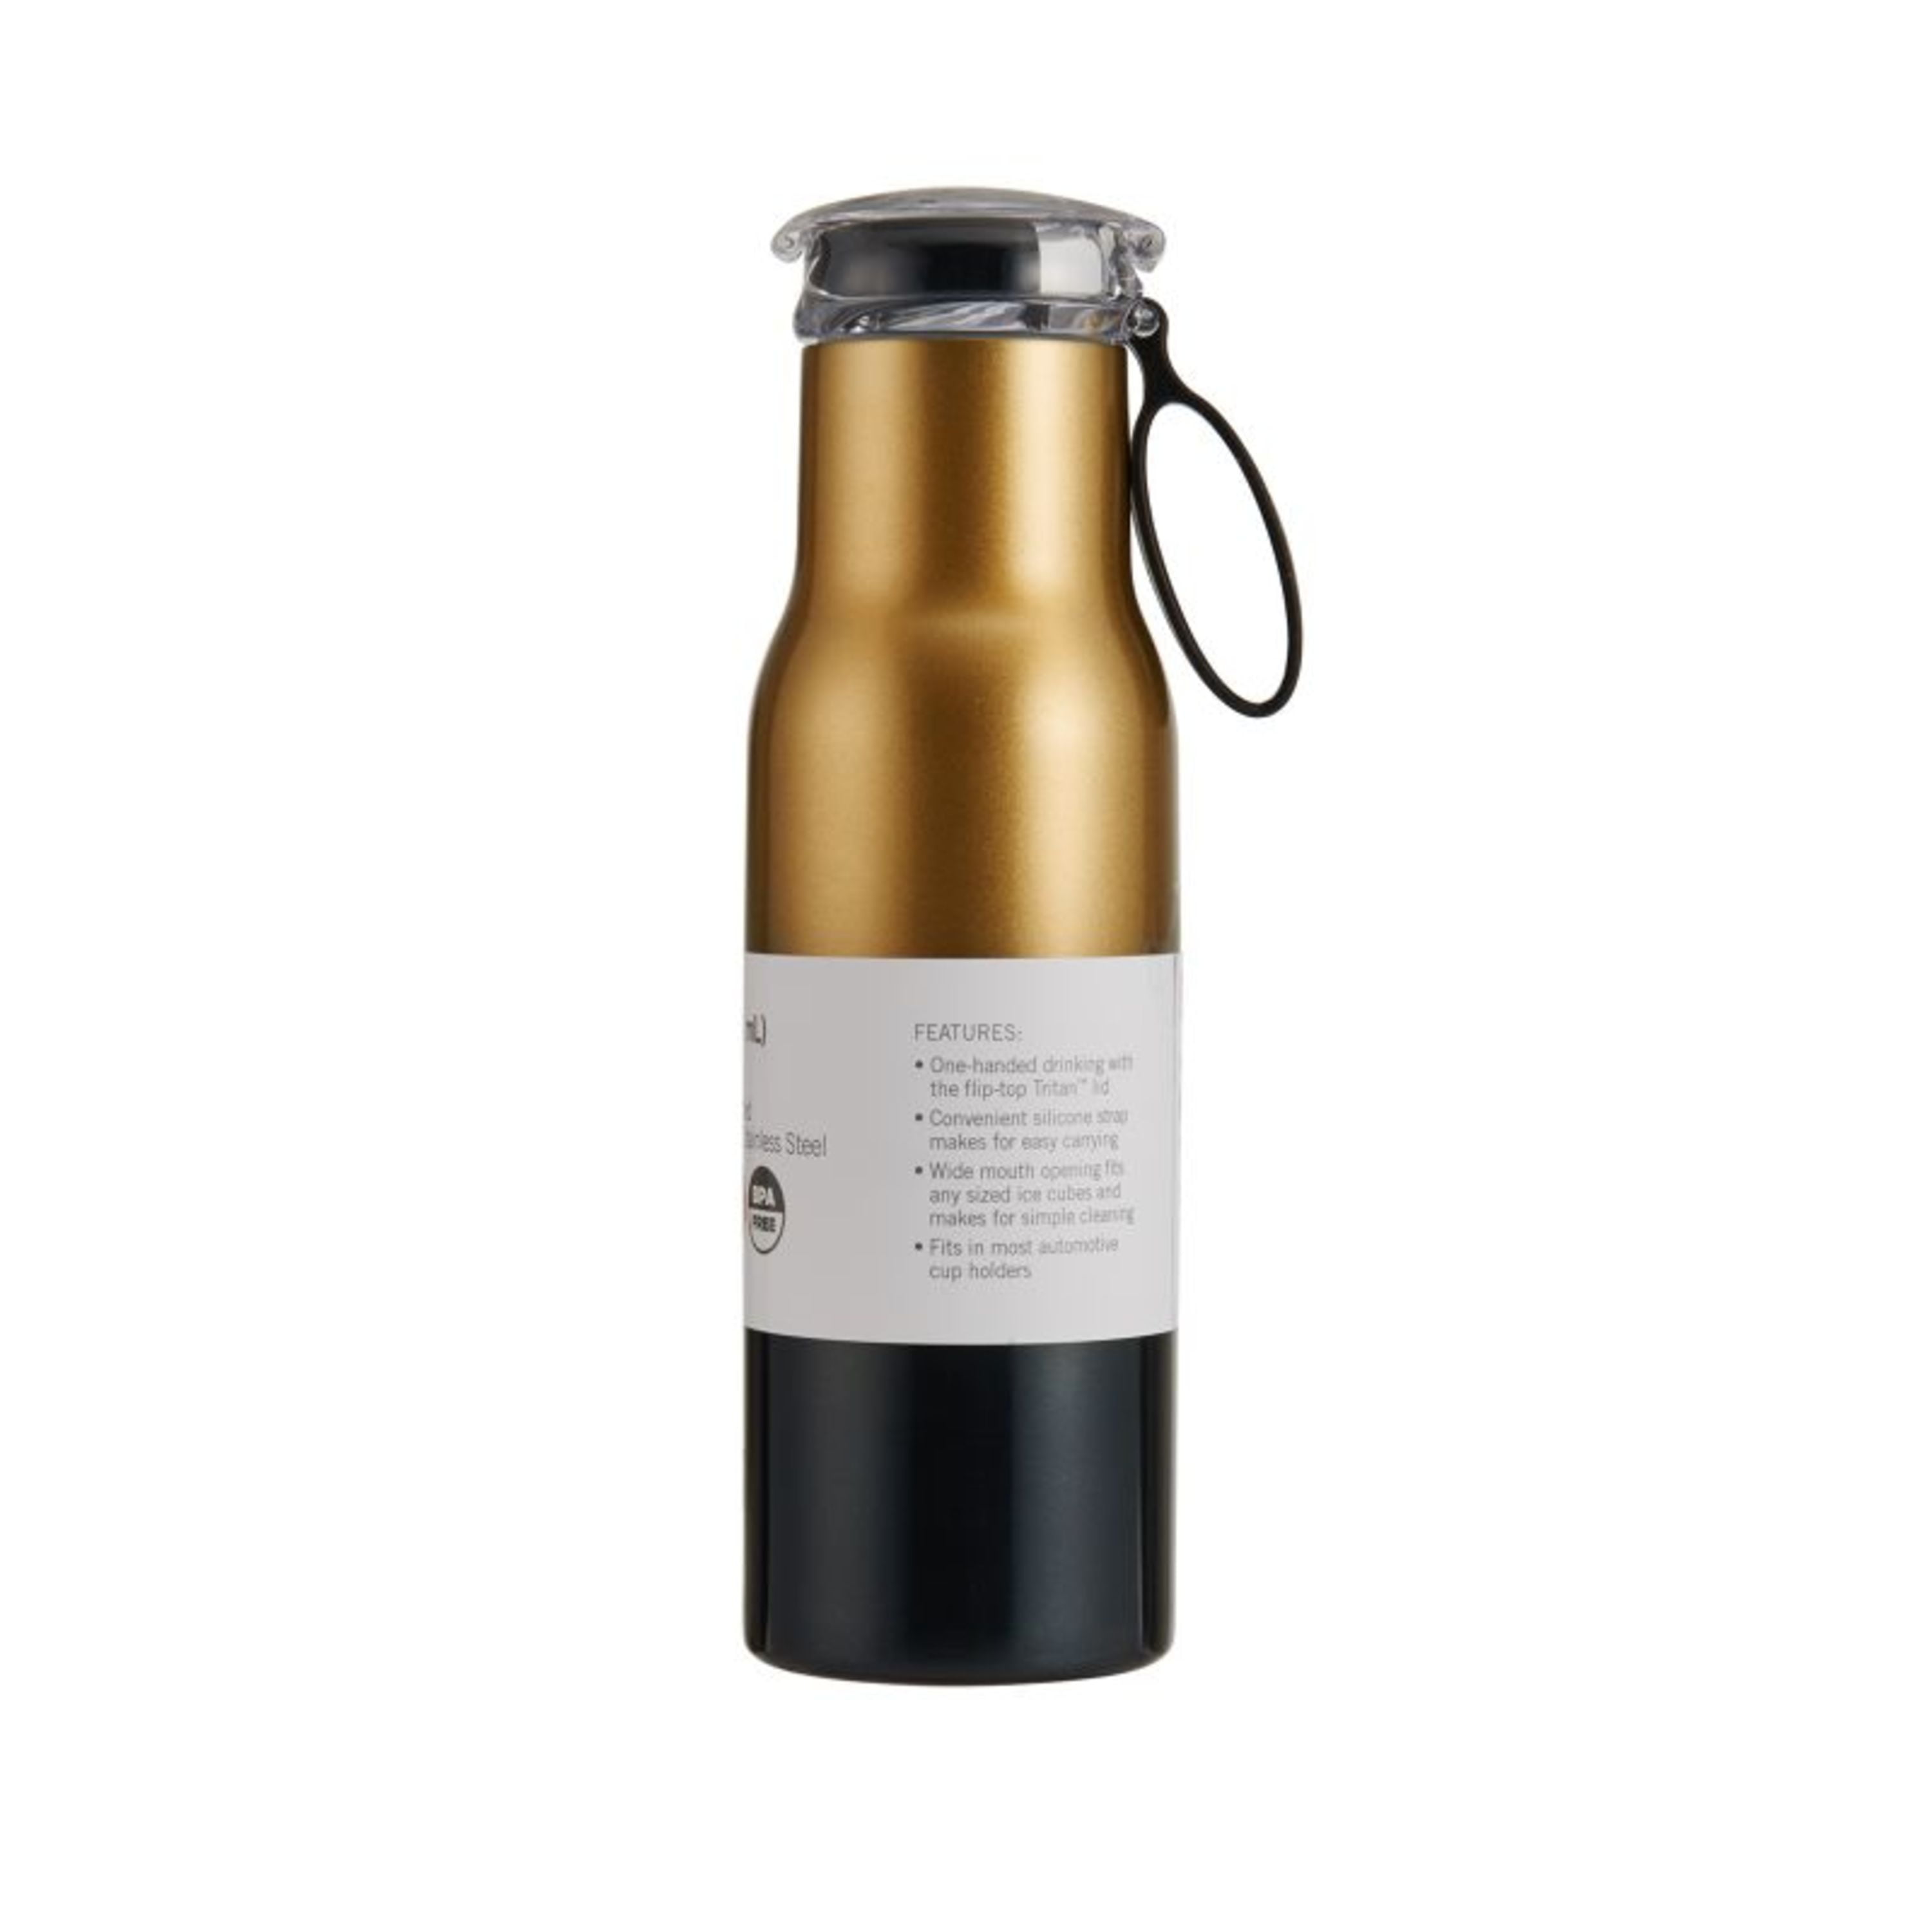 YETI Rambler 18-fl oz Stainless Steel Water Bottle in the Water Bottles &  Mugs department at